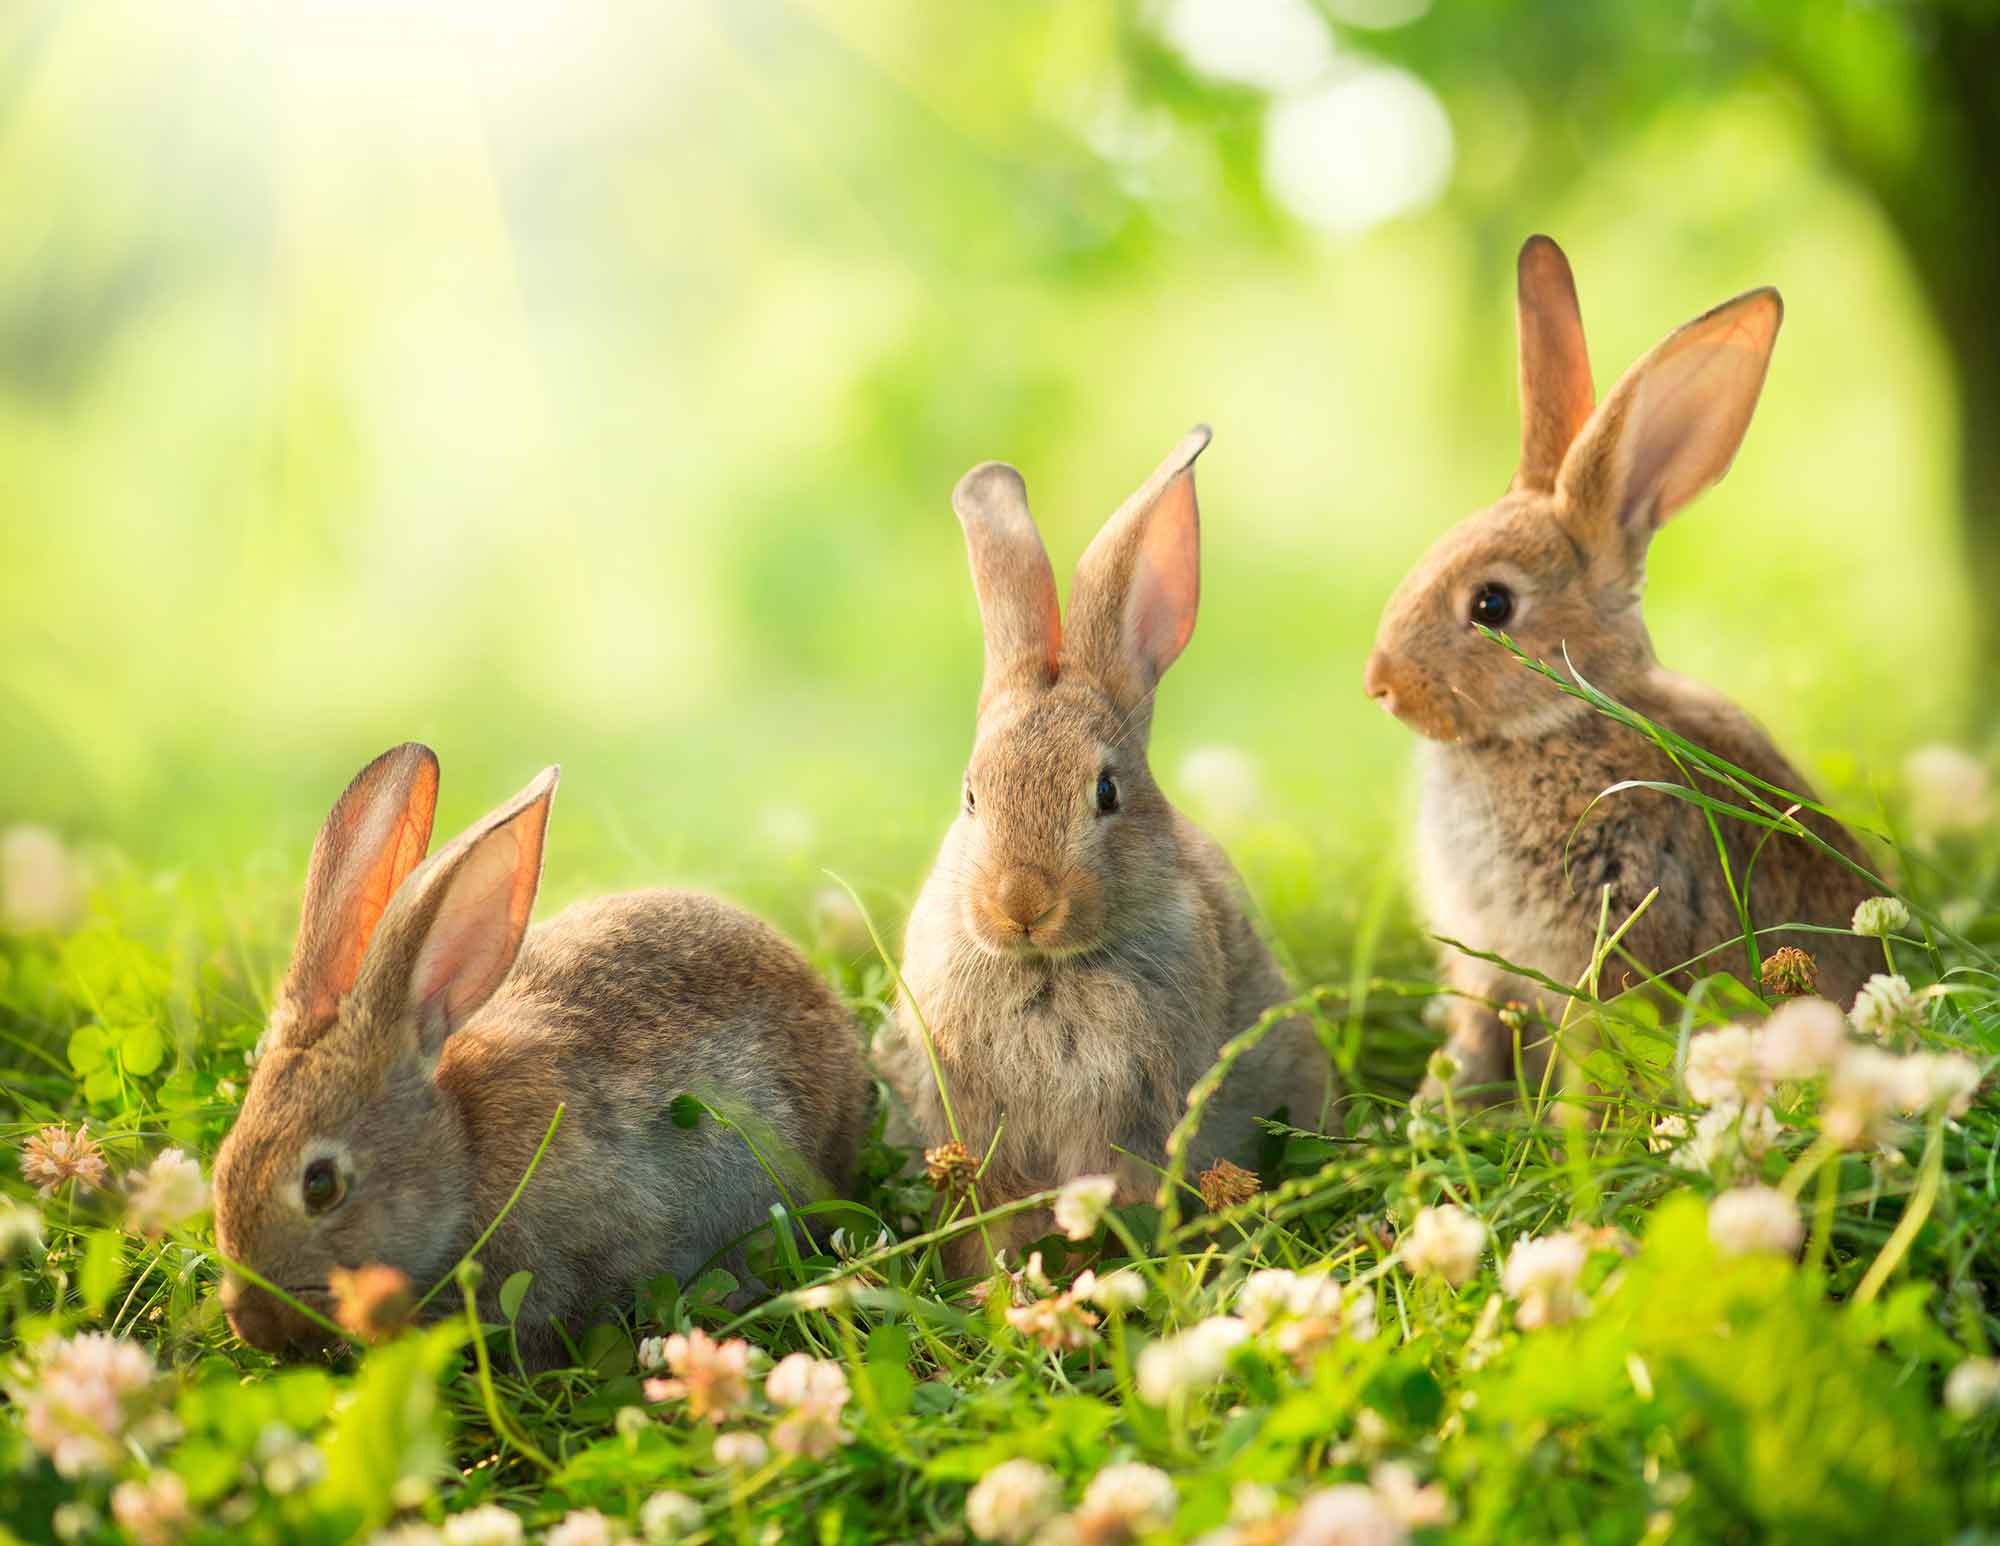 https://www.3rdwavetherapy.com/wp-content/uploads/2020/10/mindful-rabbits.jpg